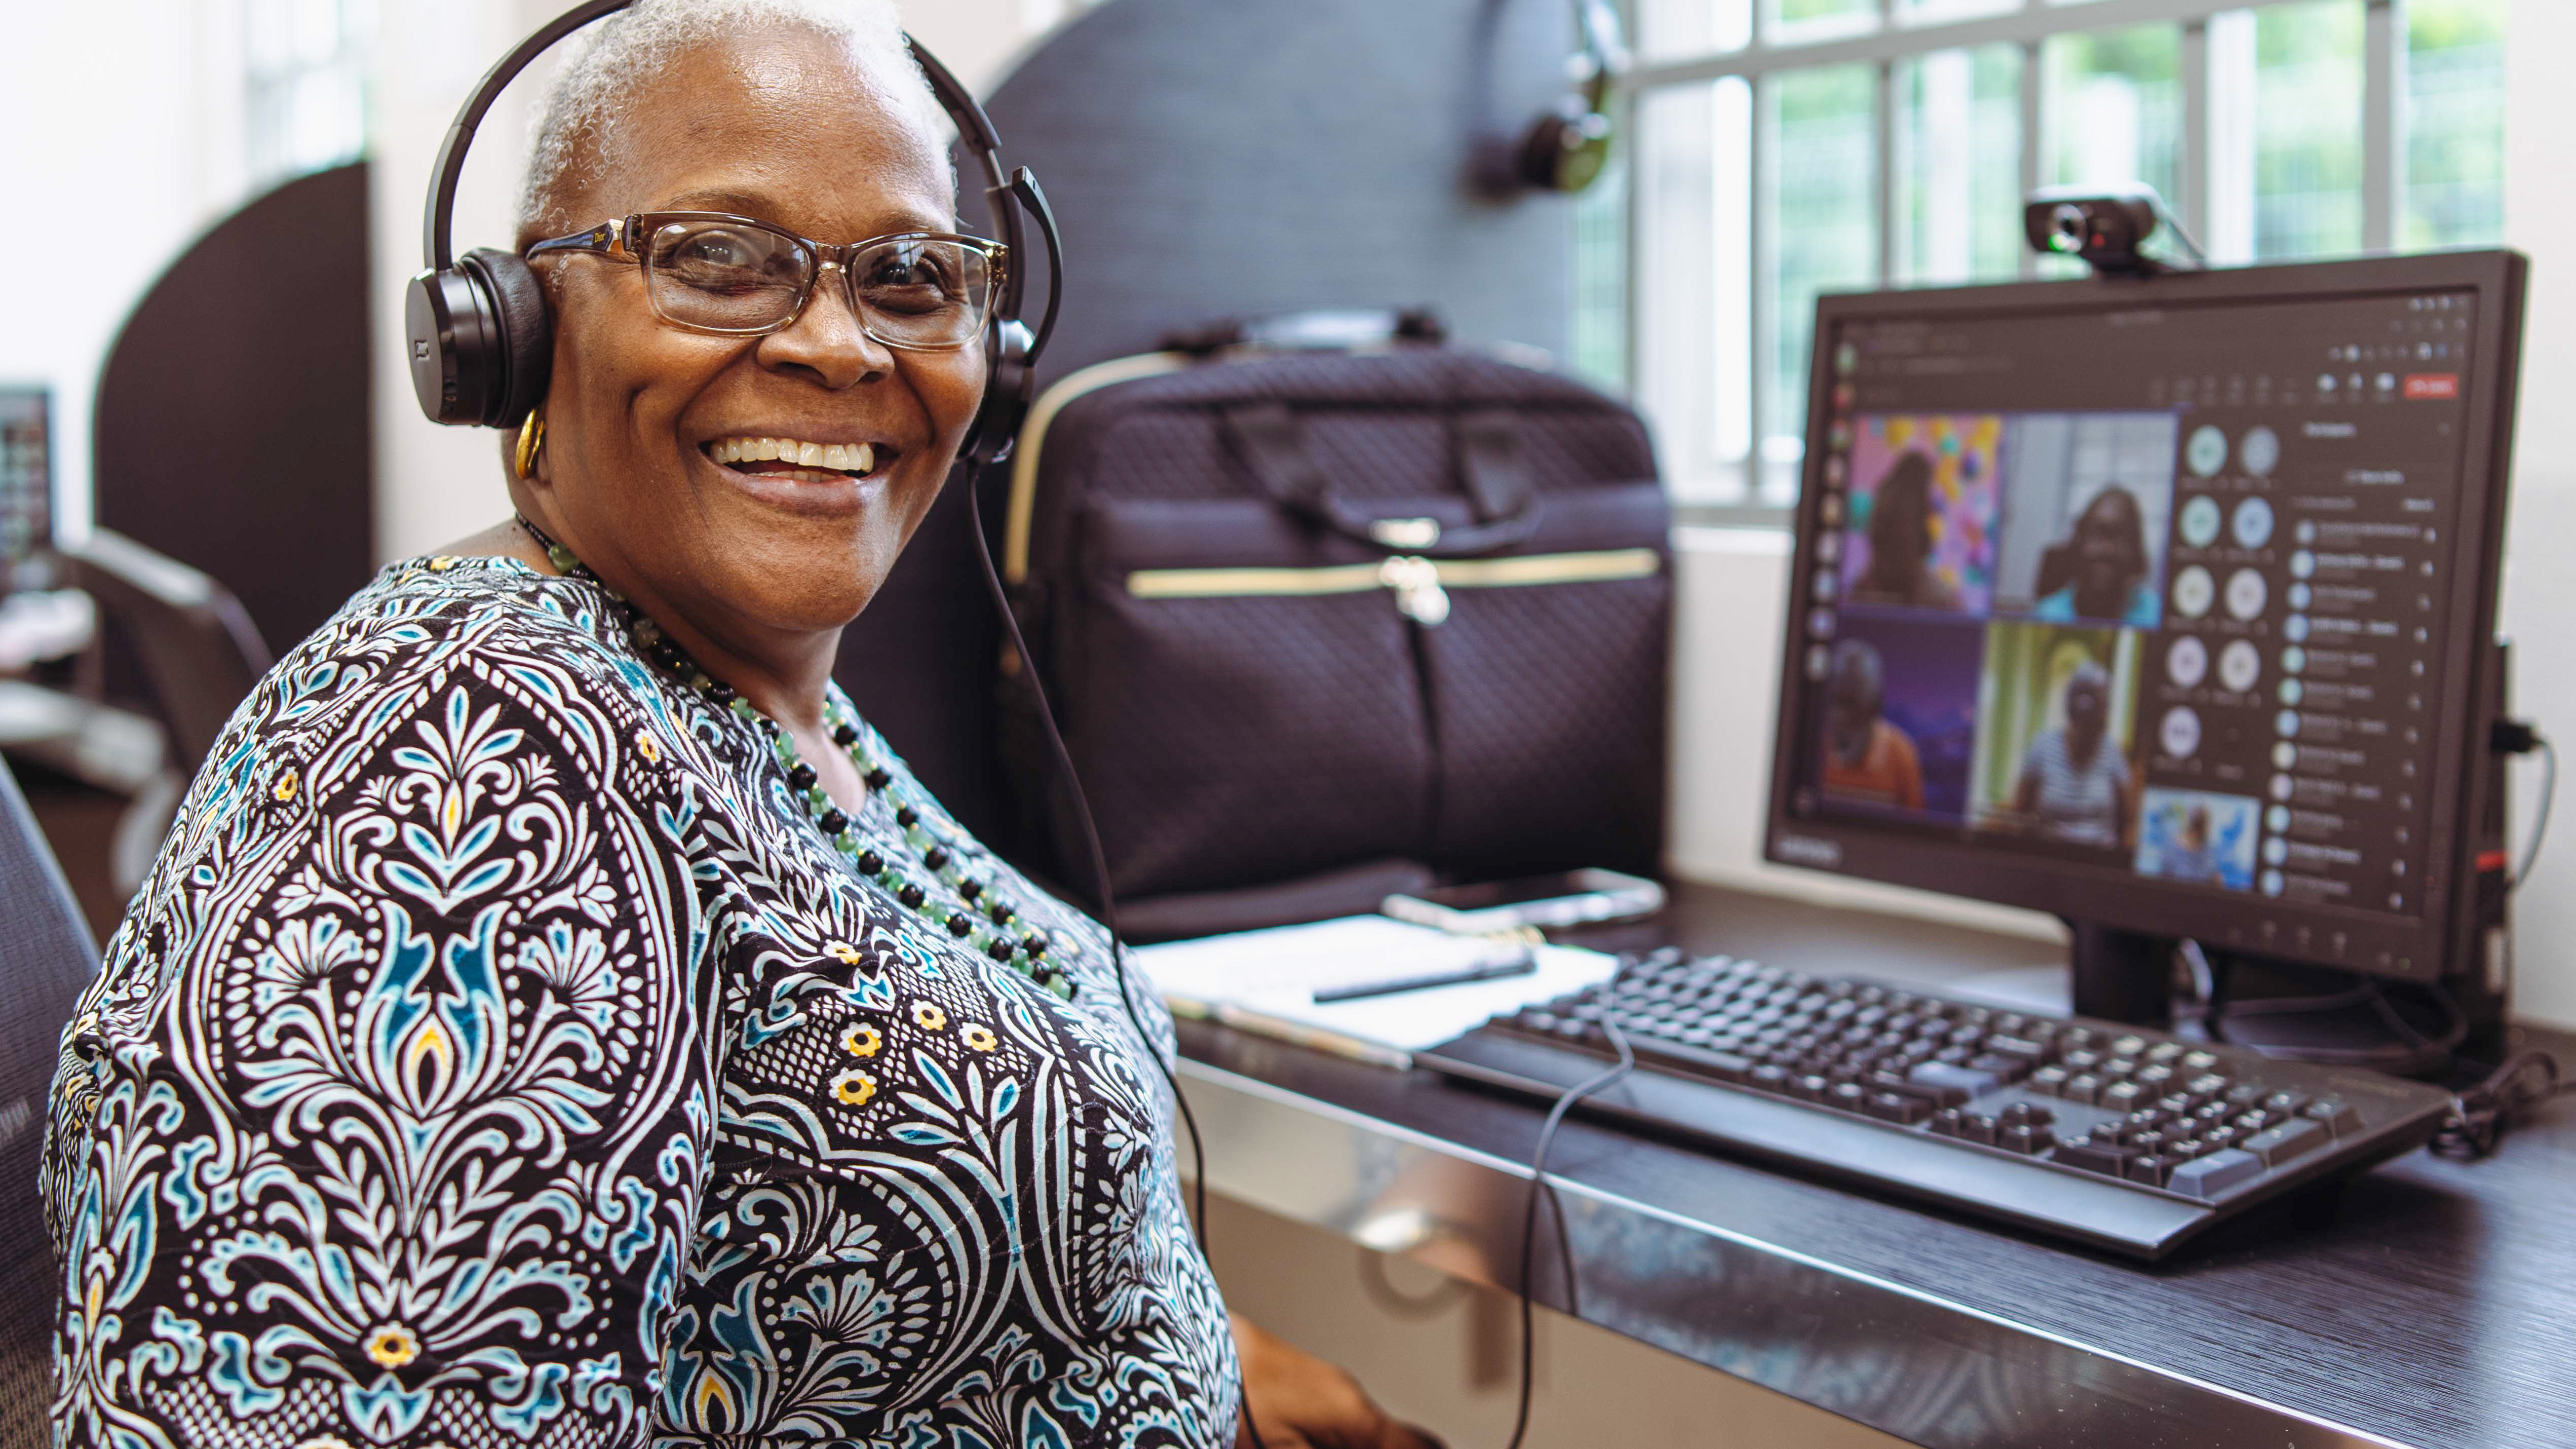 Woman wearing headphones sits at desktop computer